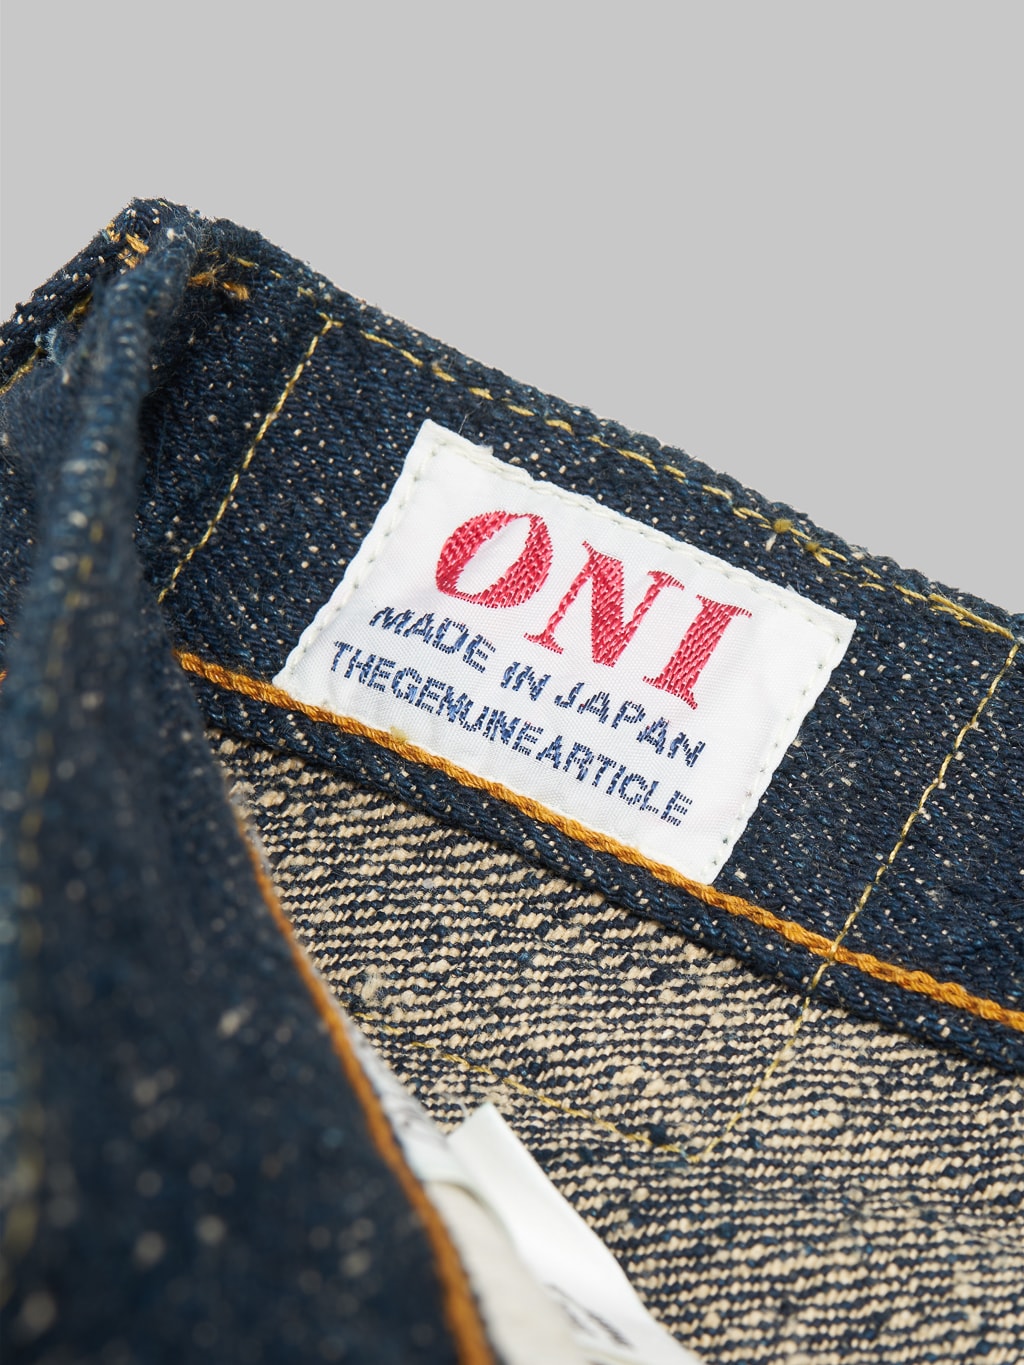 ONI Denim 246SESR Secret Super Rough Neat Straight selvedge Jeans interior tag